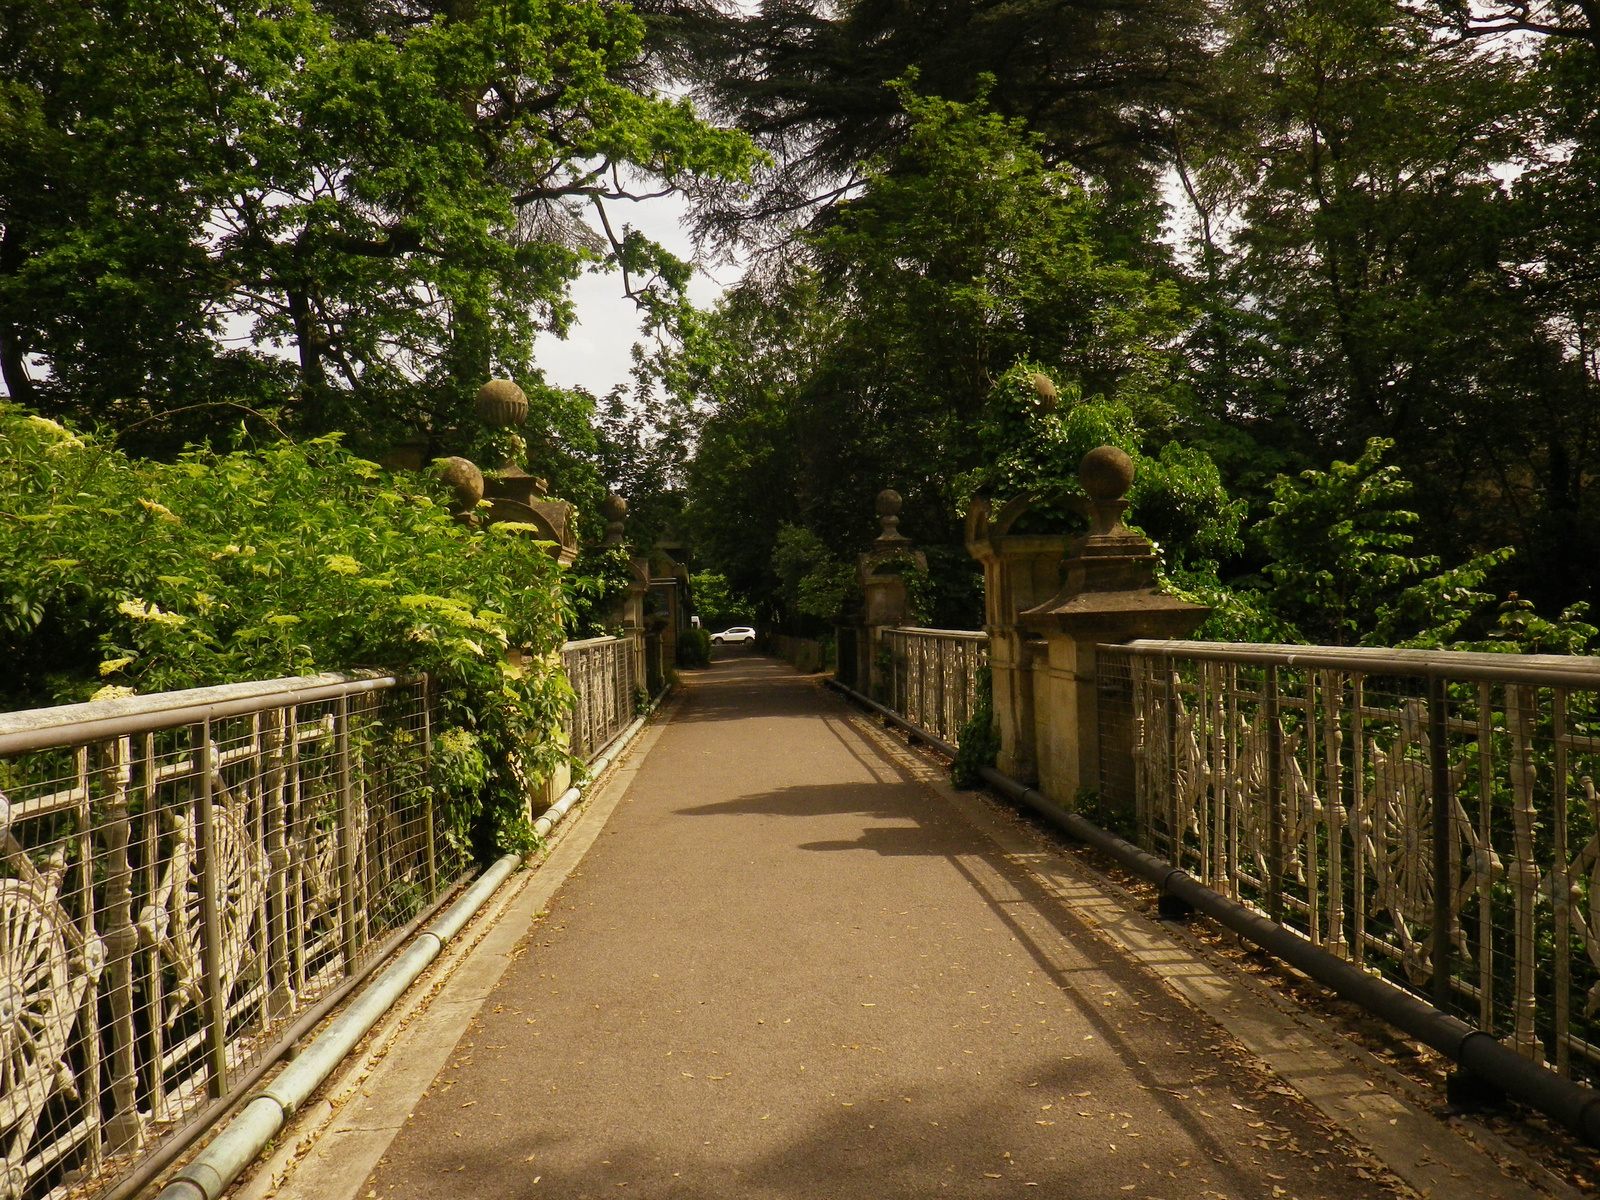 Magdalen bridge